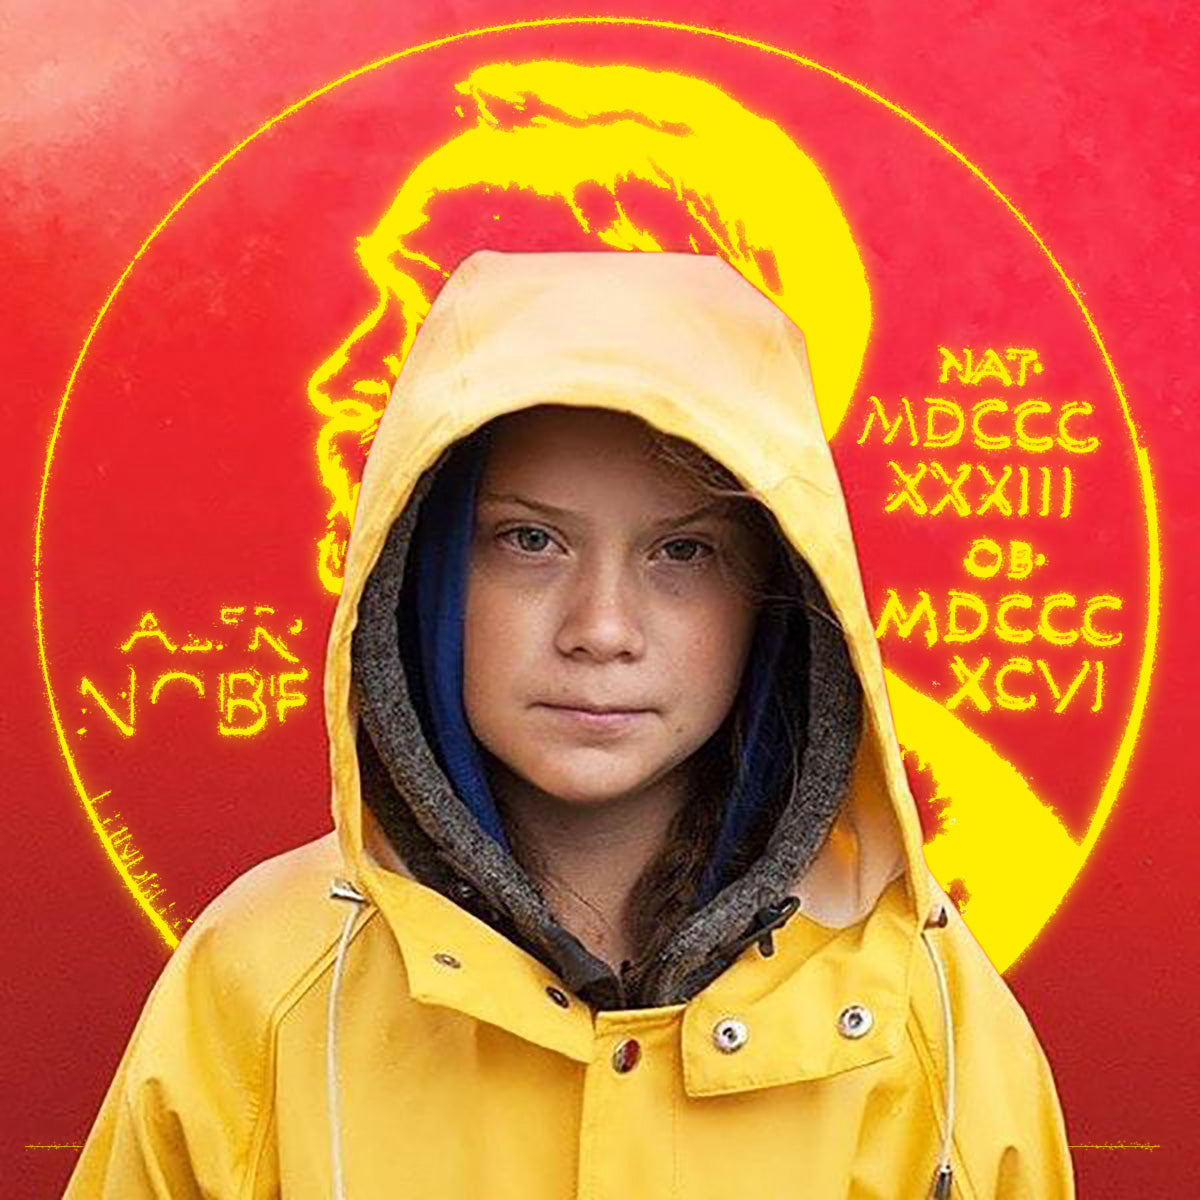 Nobel peace prize celebration for Greta Thunberg